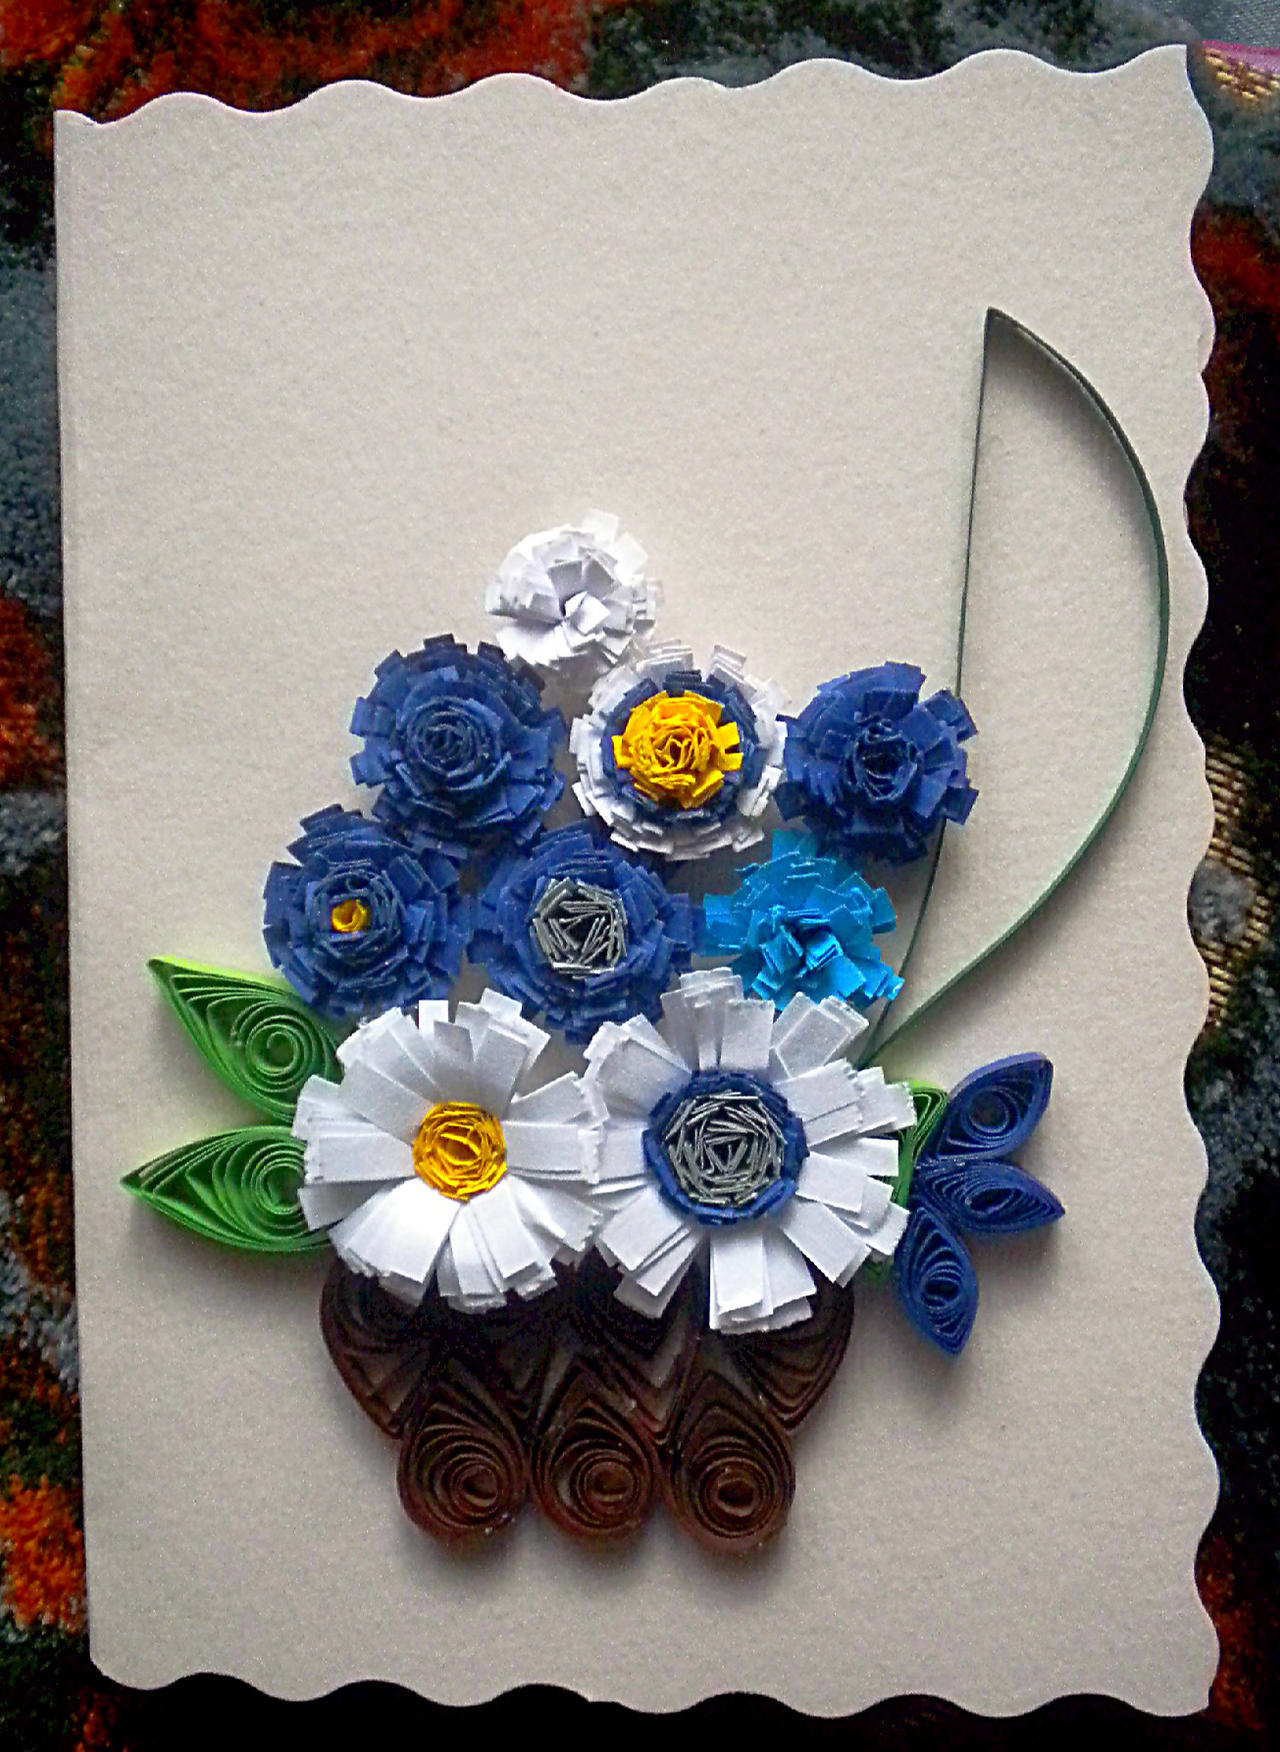 Quilled floral arrangement II